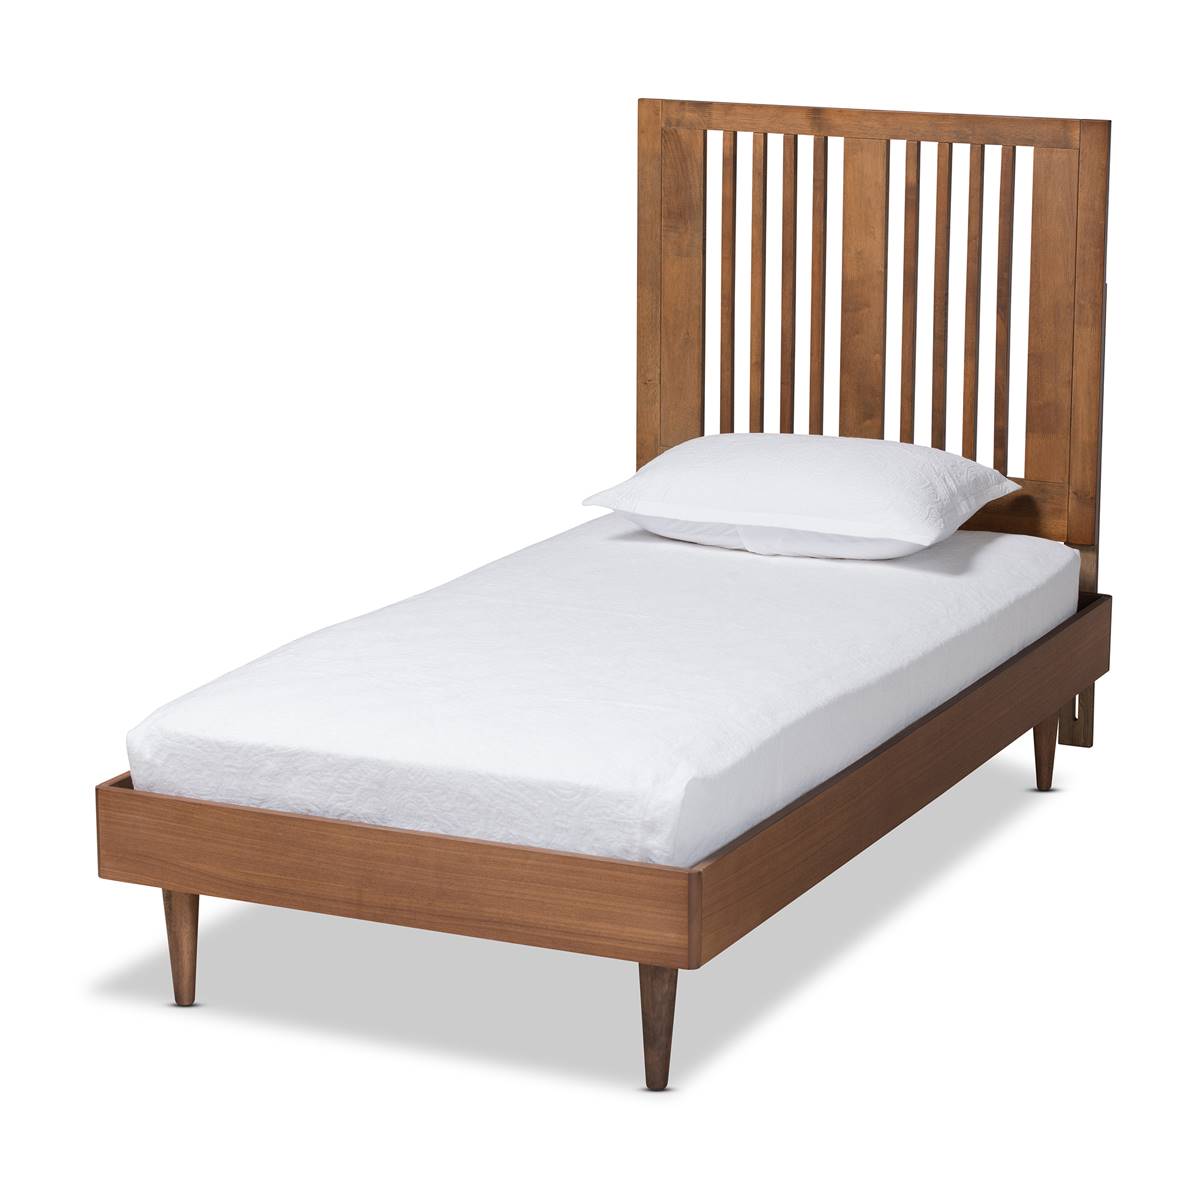 Baxton Studio Kioshi Ash Walnut Wood Twin Size Platform Bed